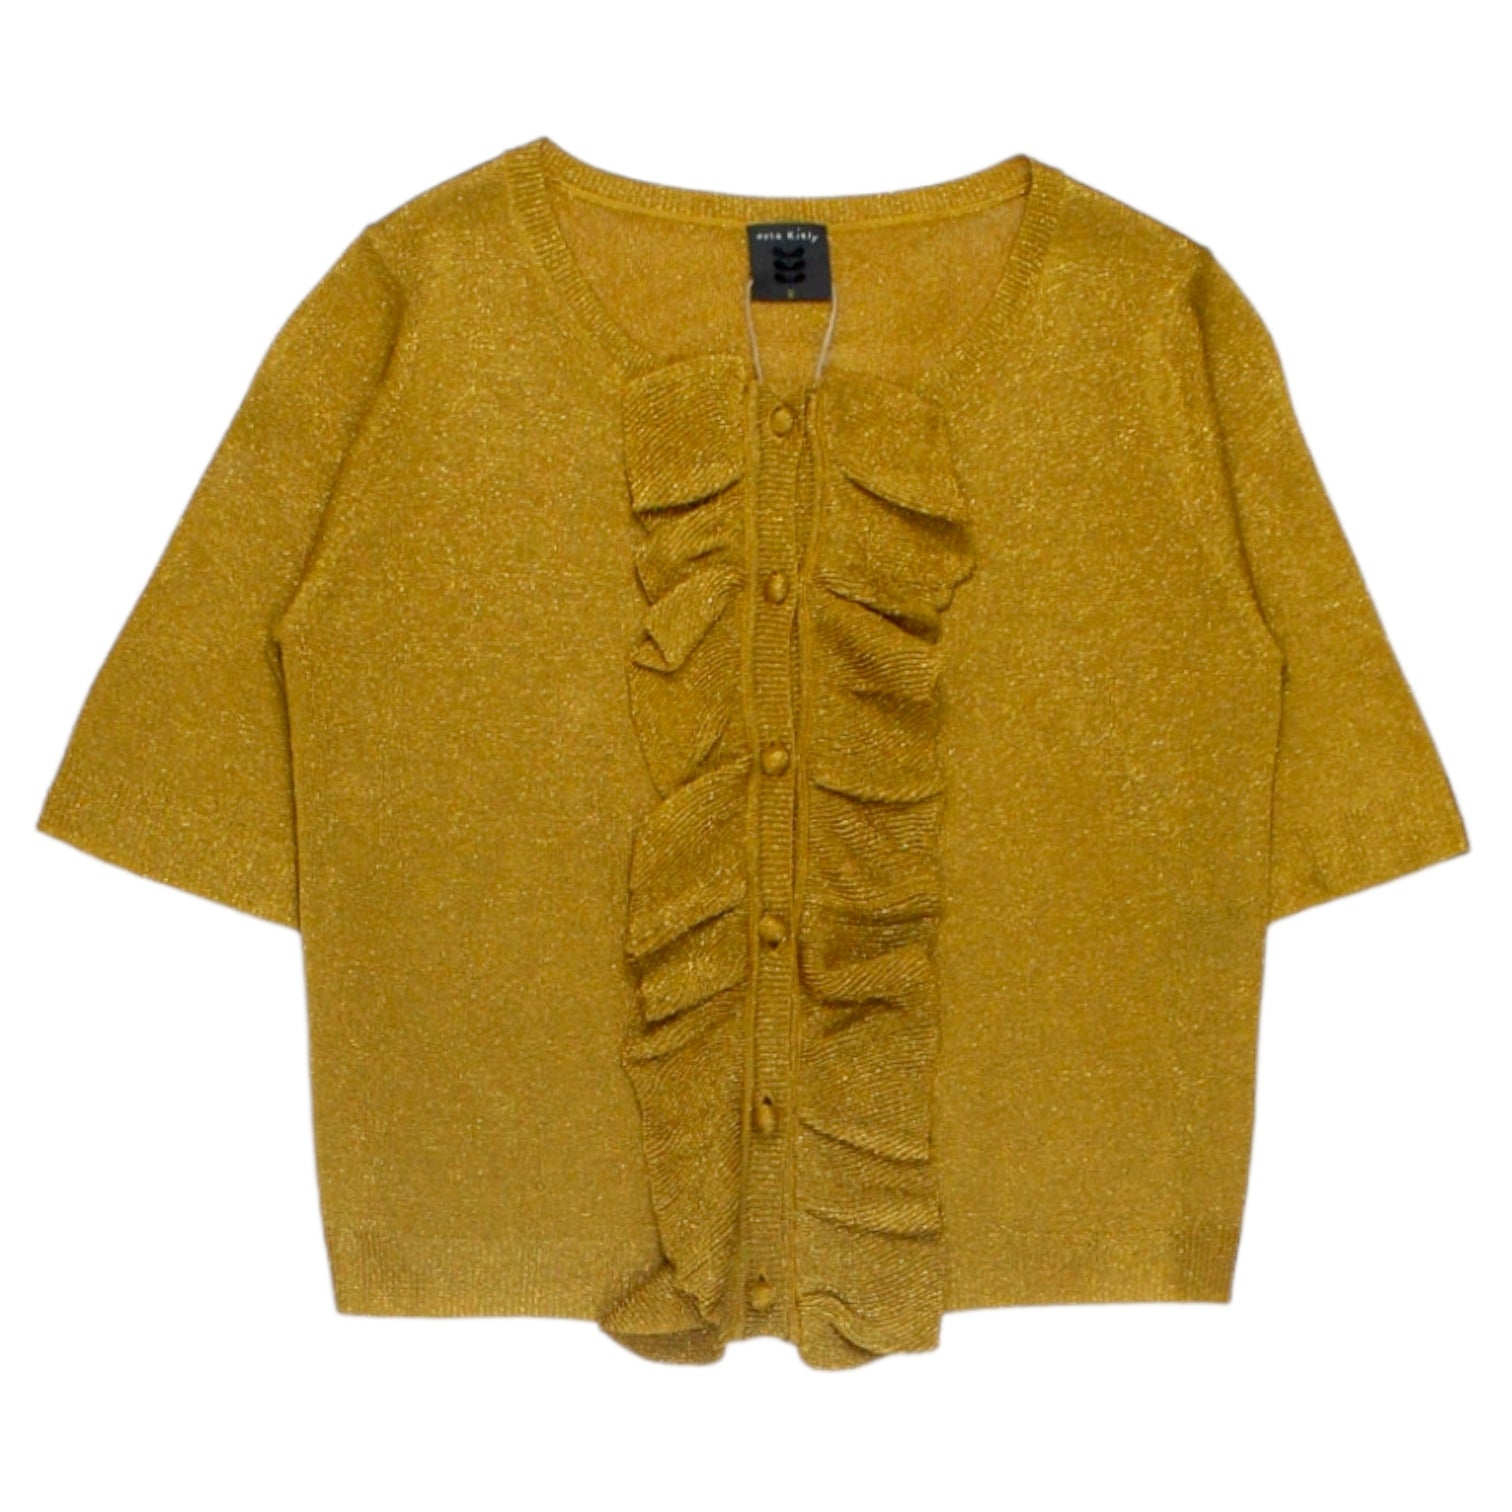 Orla Kiely Gold Knit Lurex Top